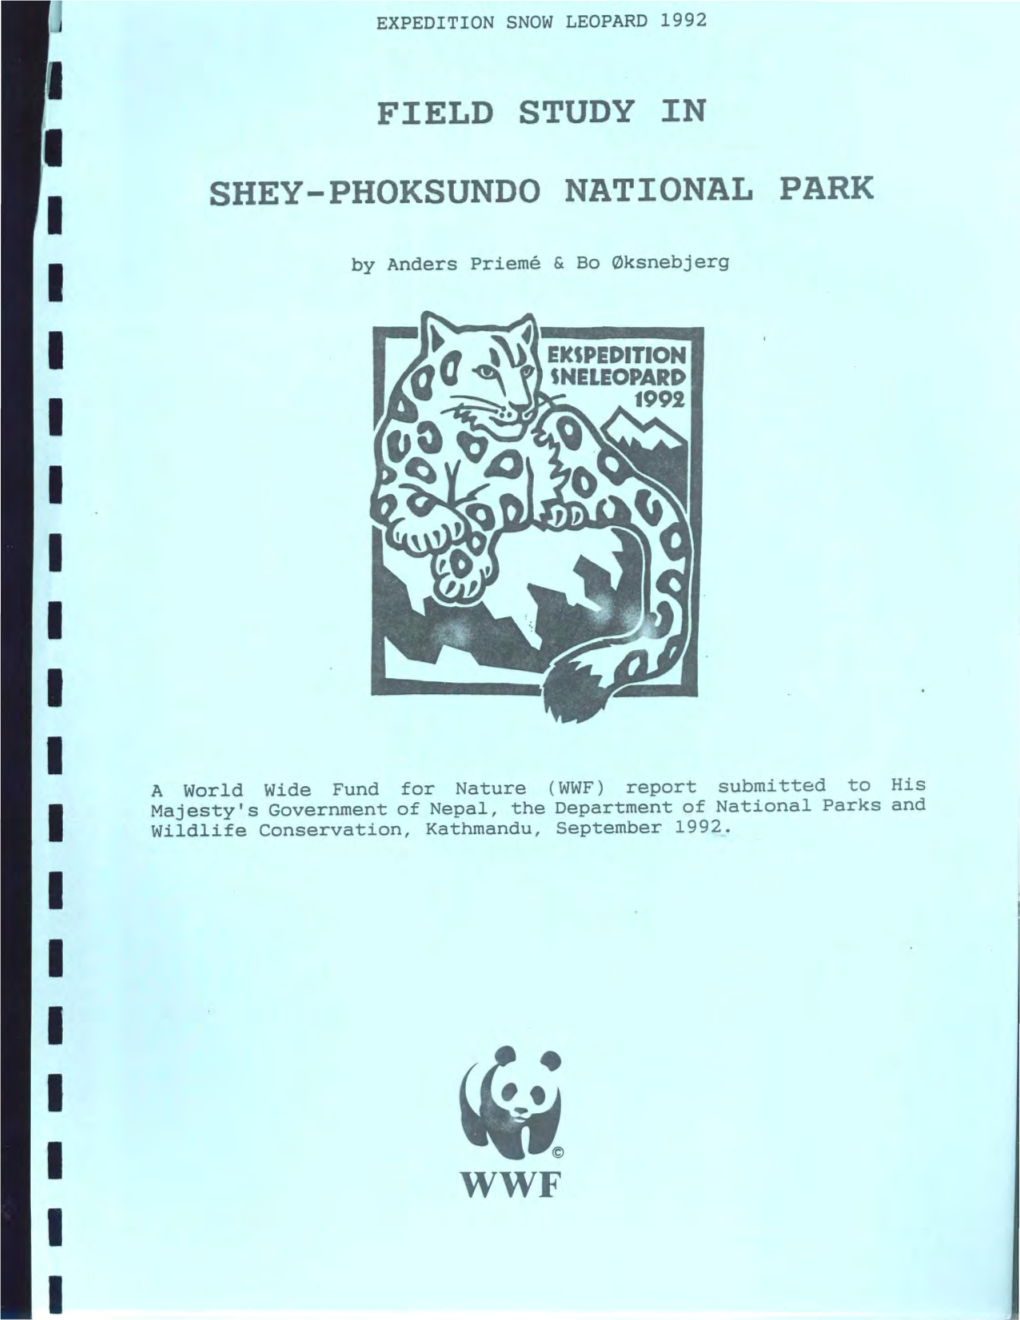 Field Study in Shey-Phoksundo National Park